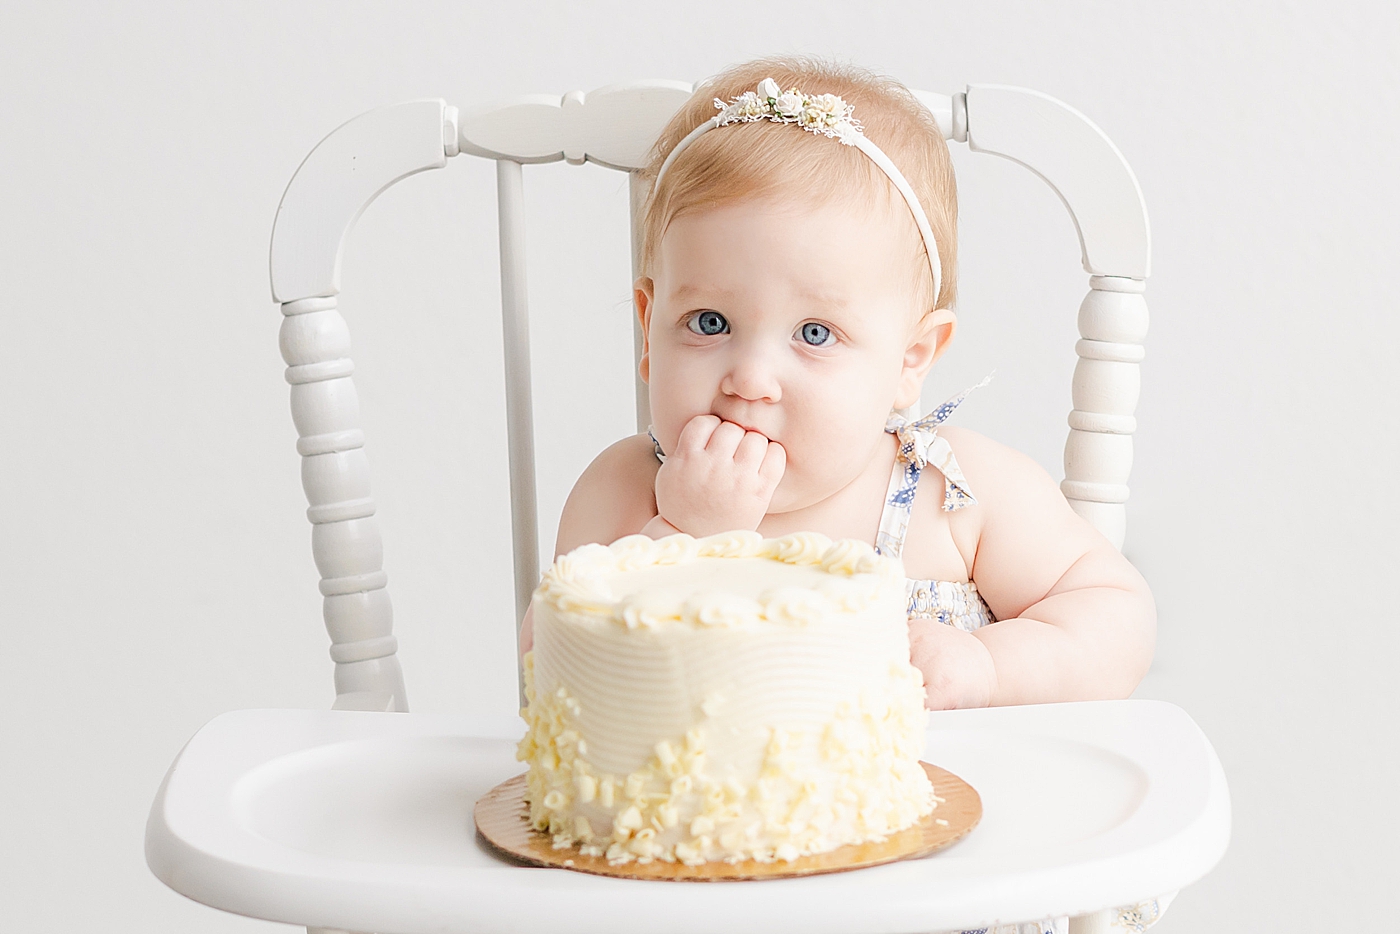 Baby girl with blue eyes eating a smash cake | Sana Ahmed Photography